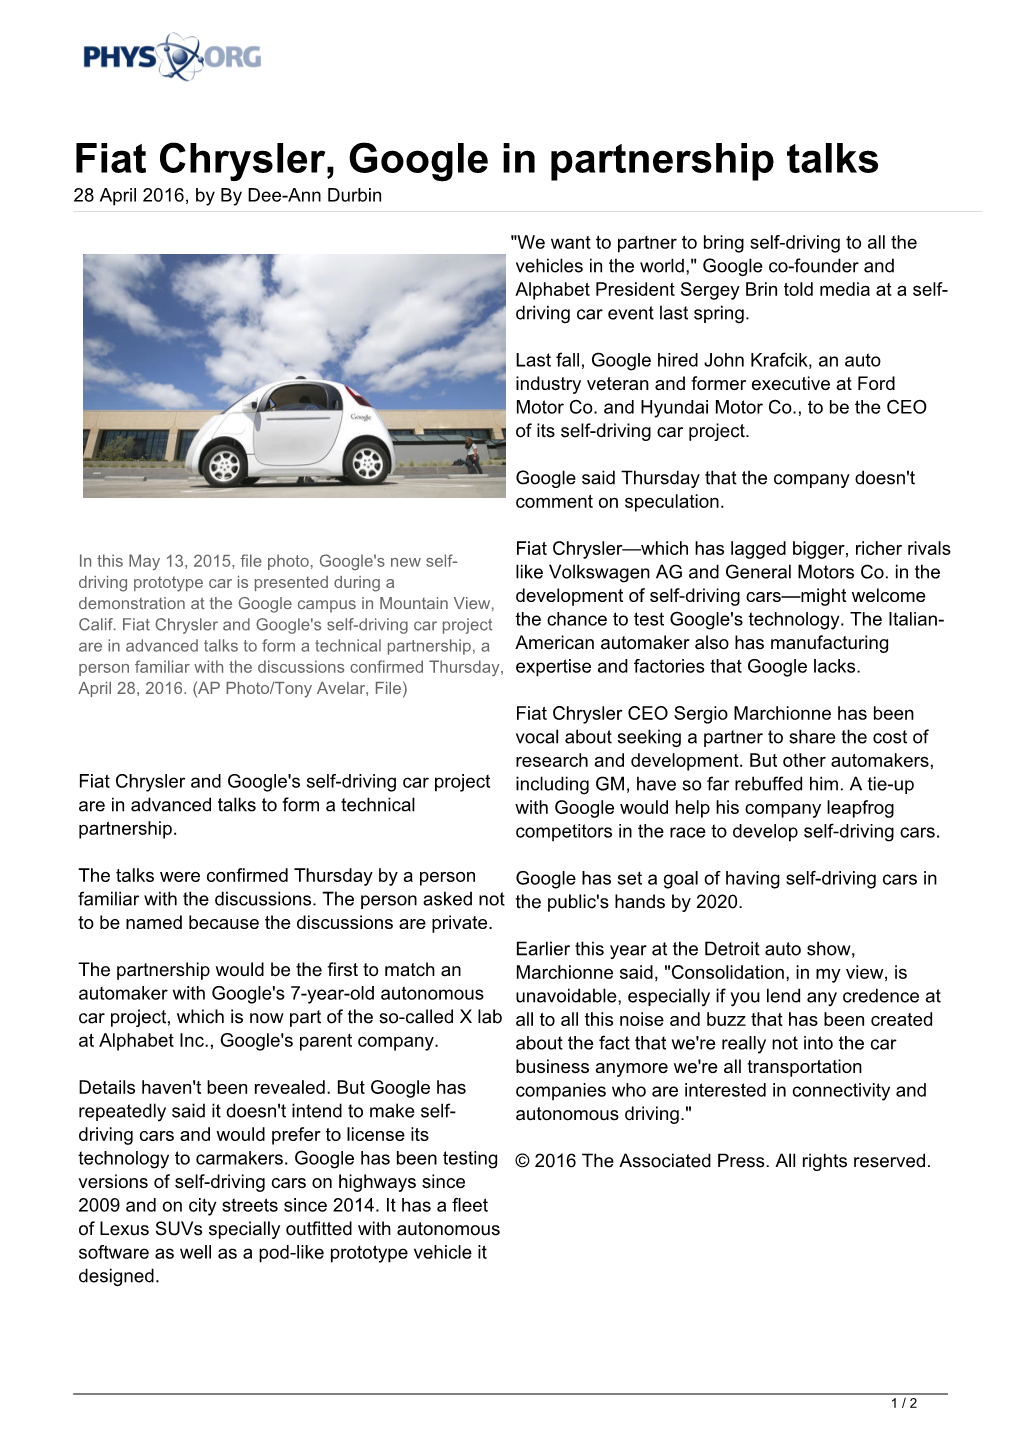 Fiat Chrysler, Google in Partnership Talks 28 April 2016, by by Dee-Ann Durbin